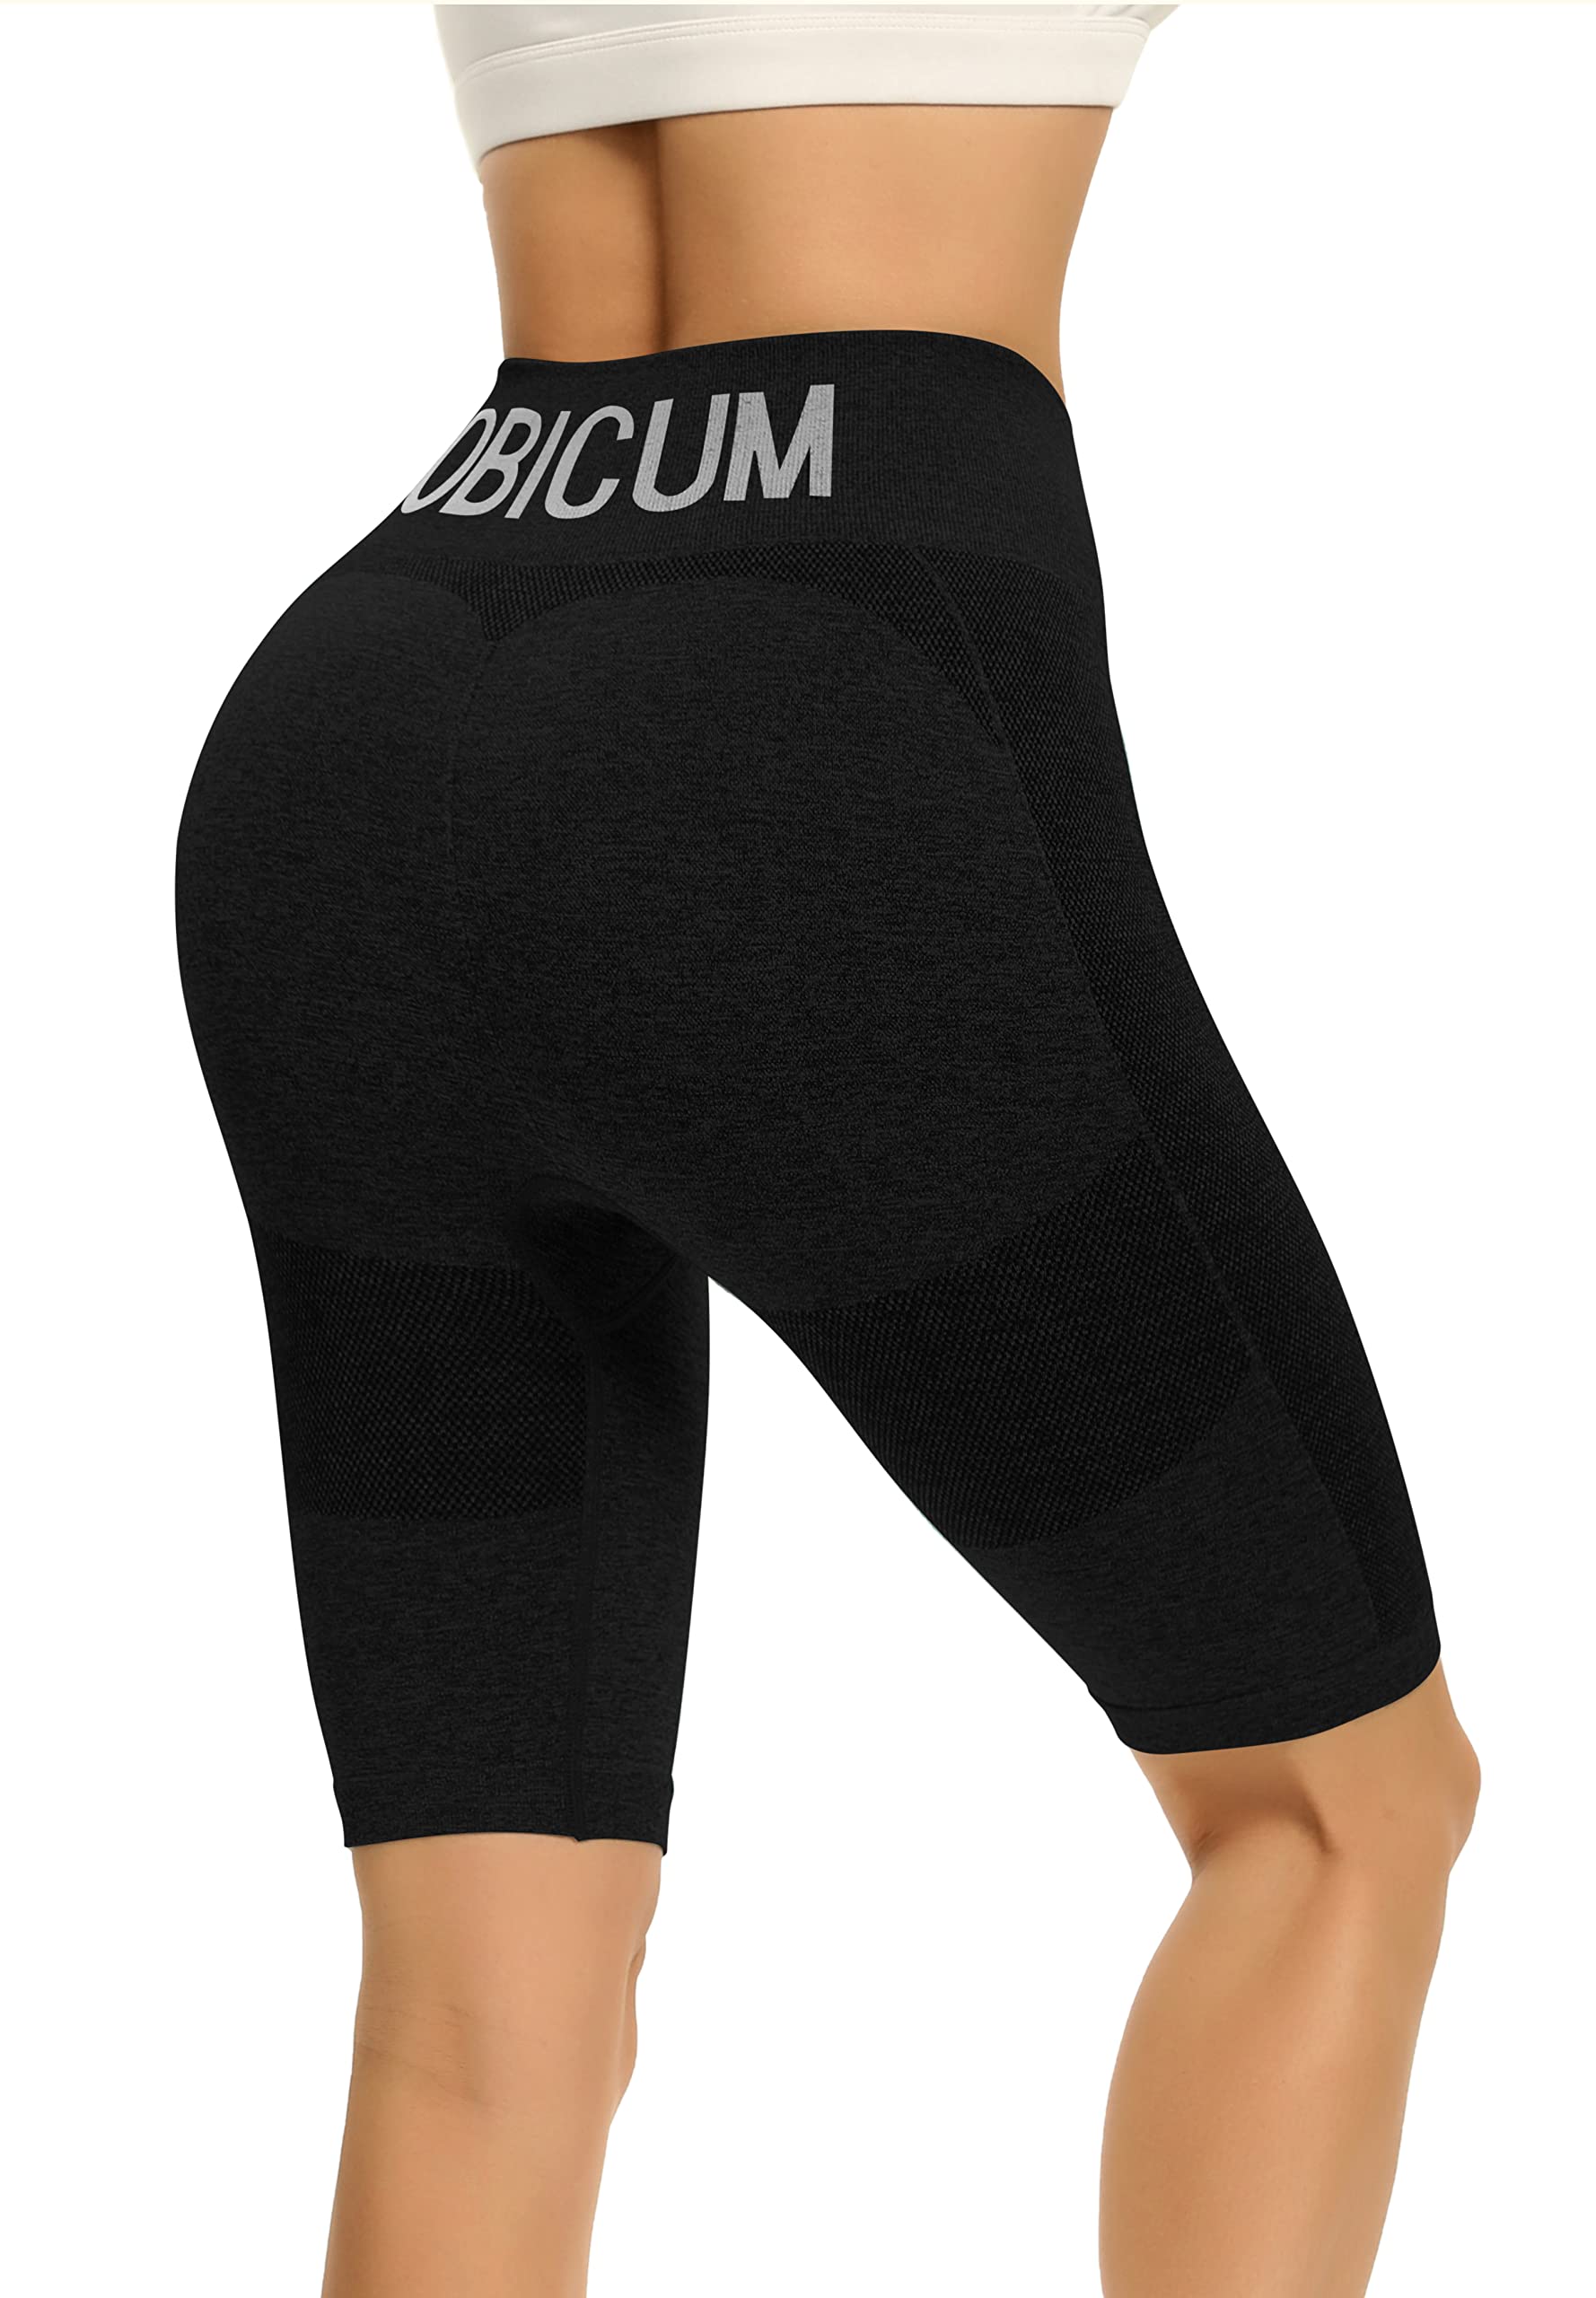 OBICUM Running Shorts High Waist Yoga Shorts Seamless Tummy Butt Lifting Control Athletic Workout Gym Shorts for Women